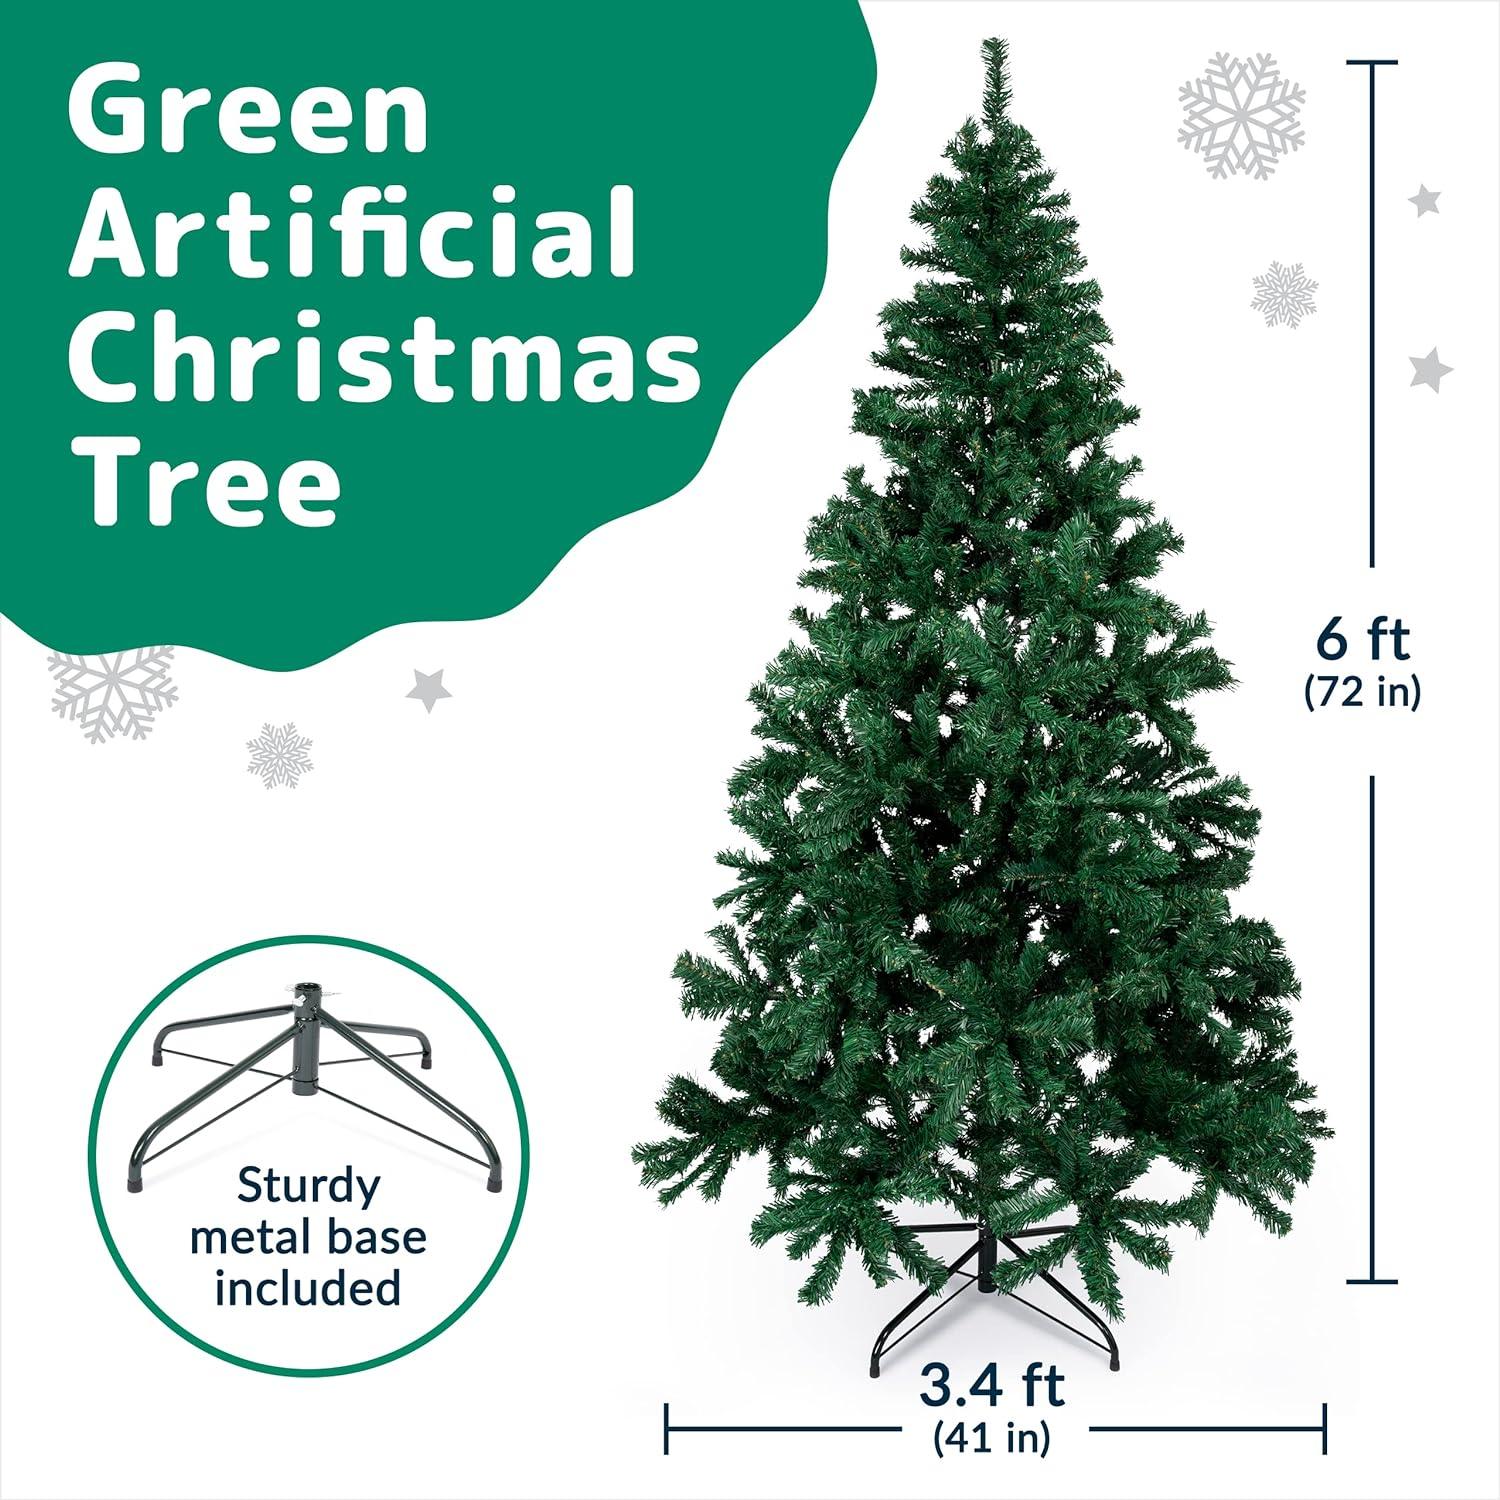 Prextex Christmas Tree - 1.8M / 6Ft Artificial Canadian Fir Full Pop-up - Massive Discounts